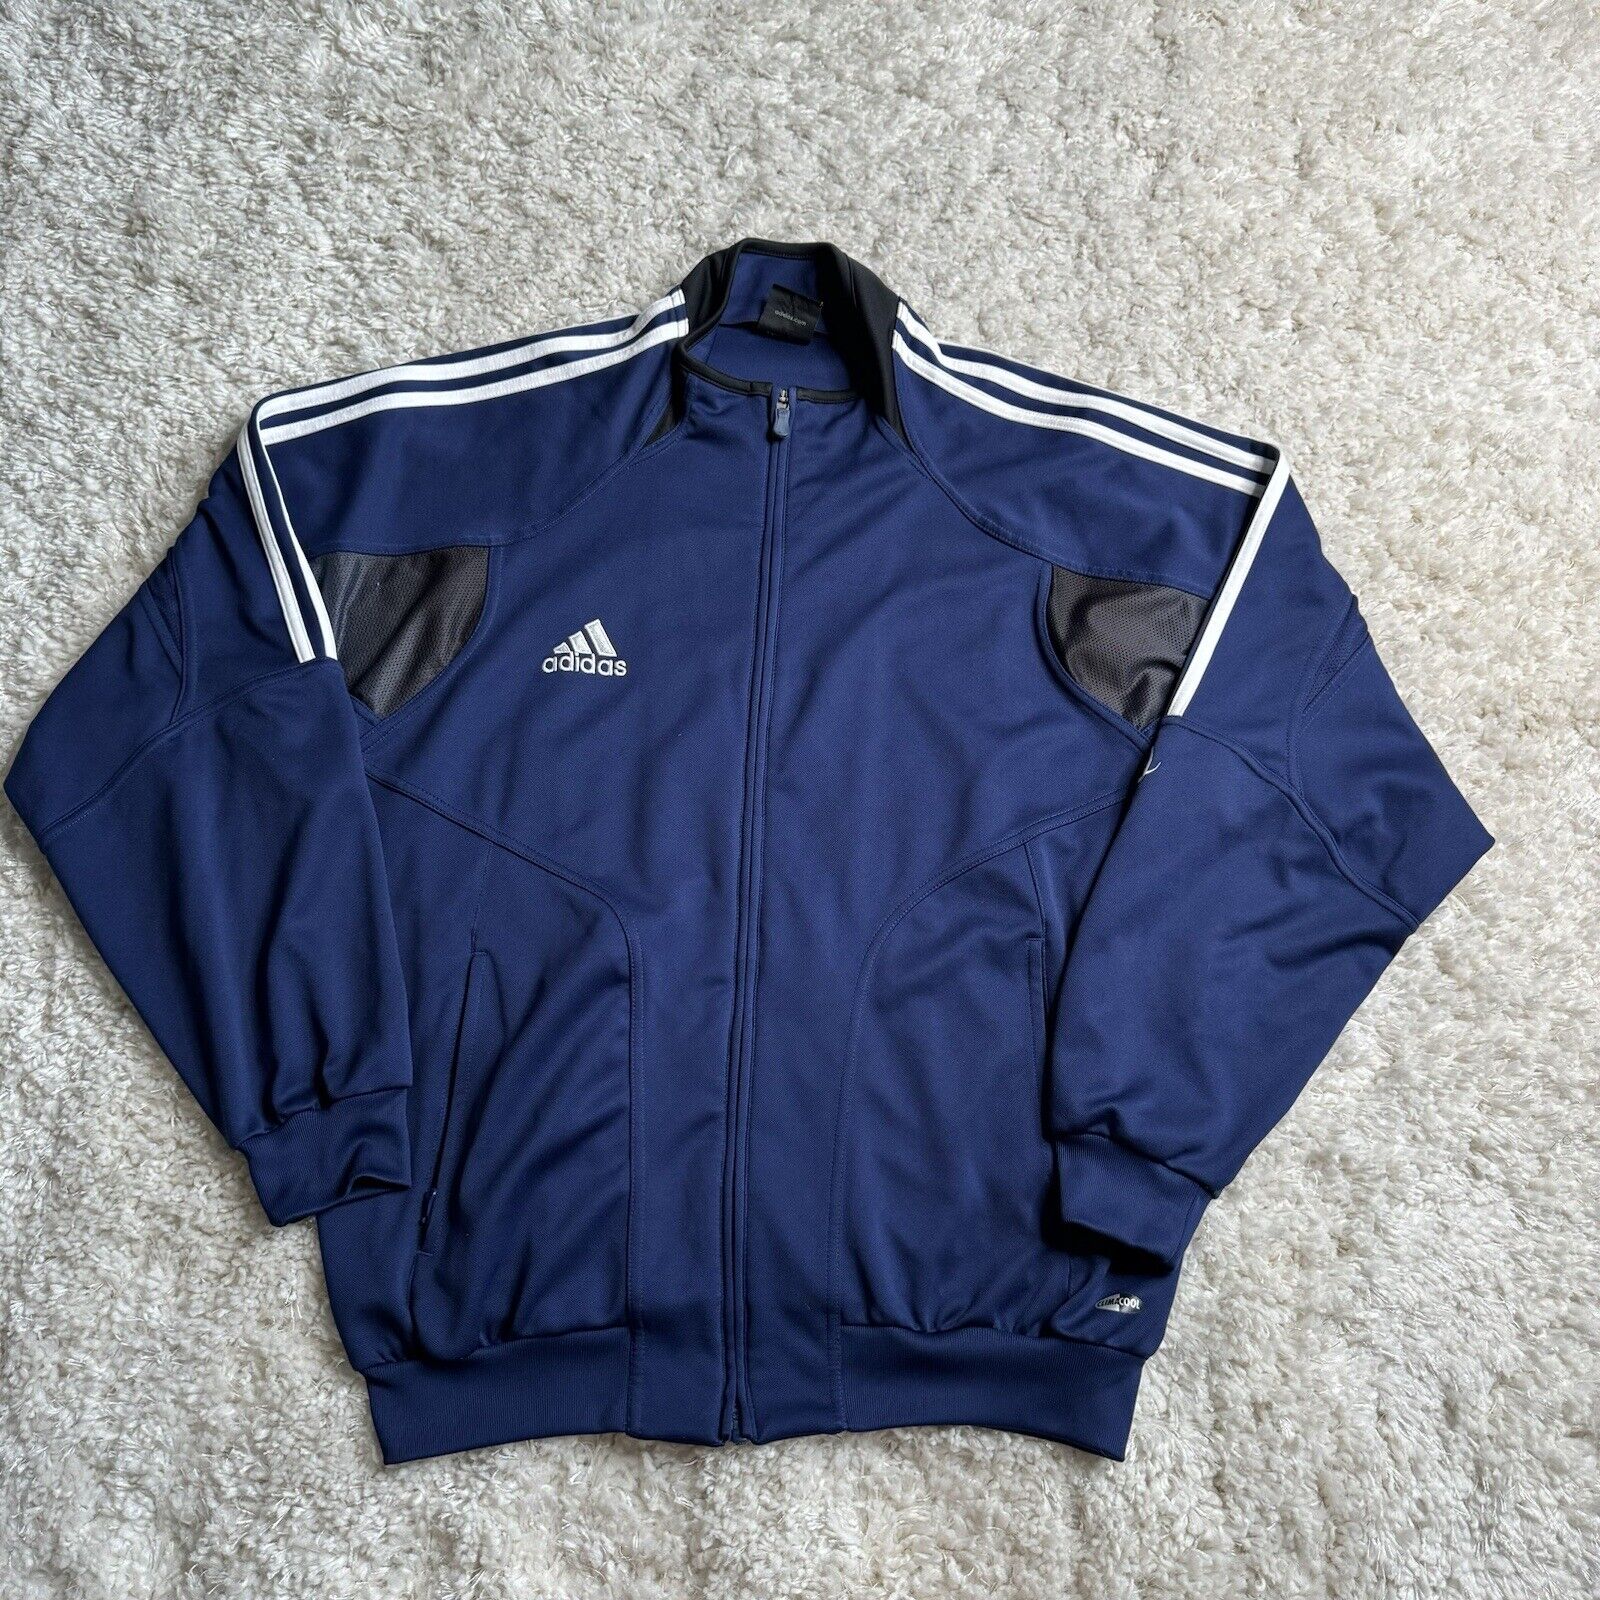 Vintage Adidas Jacket Mens Large Blue Full Zip Sports Soccer 90s Three Stripe